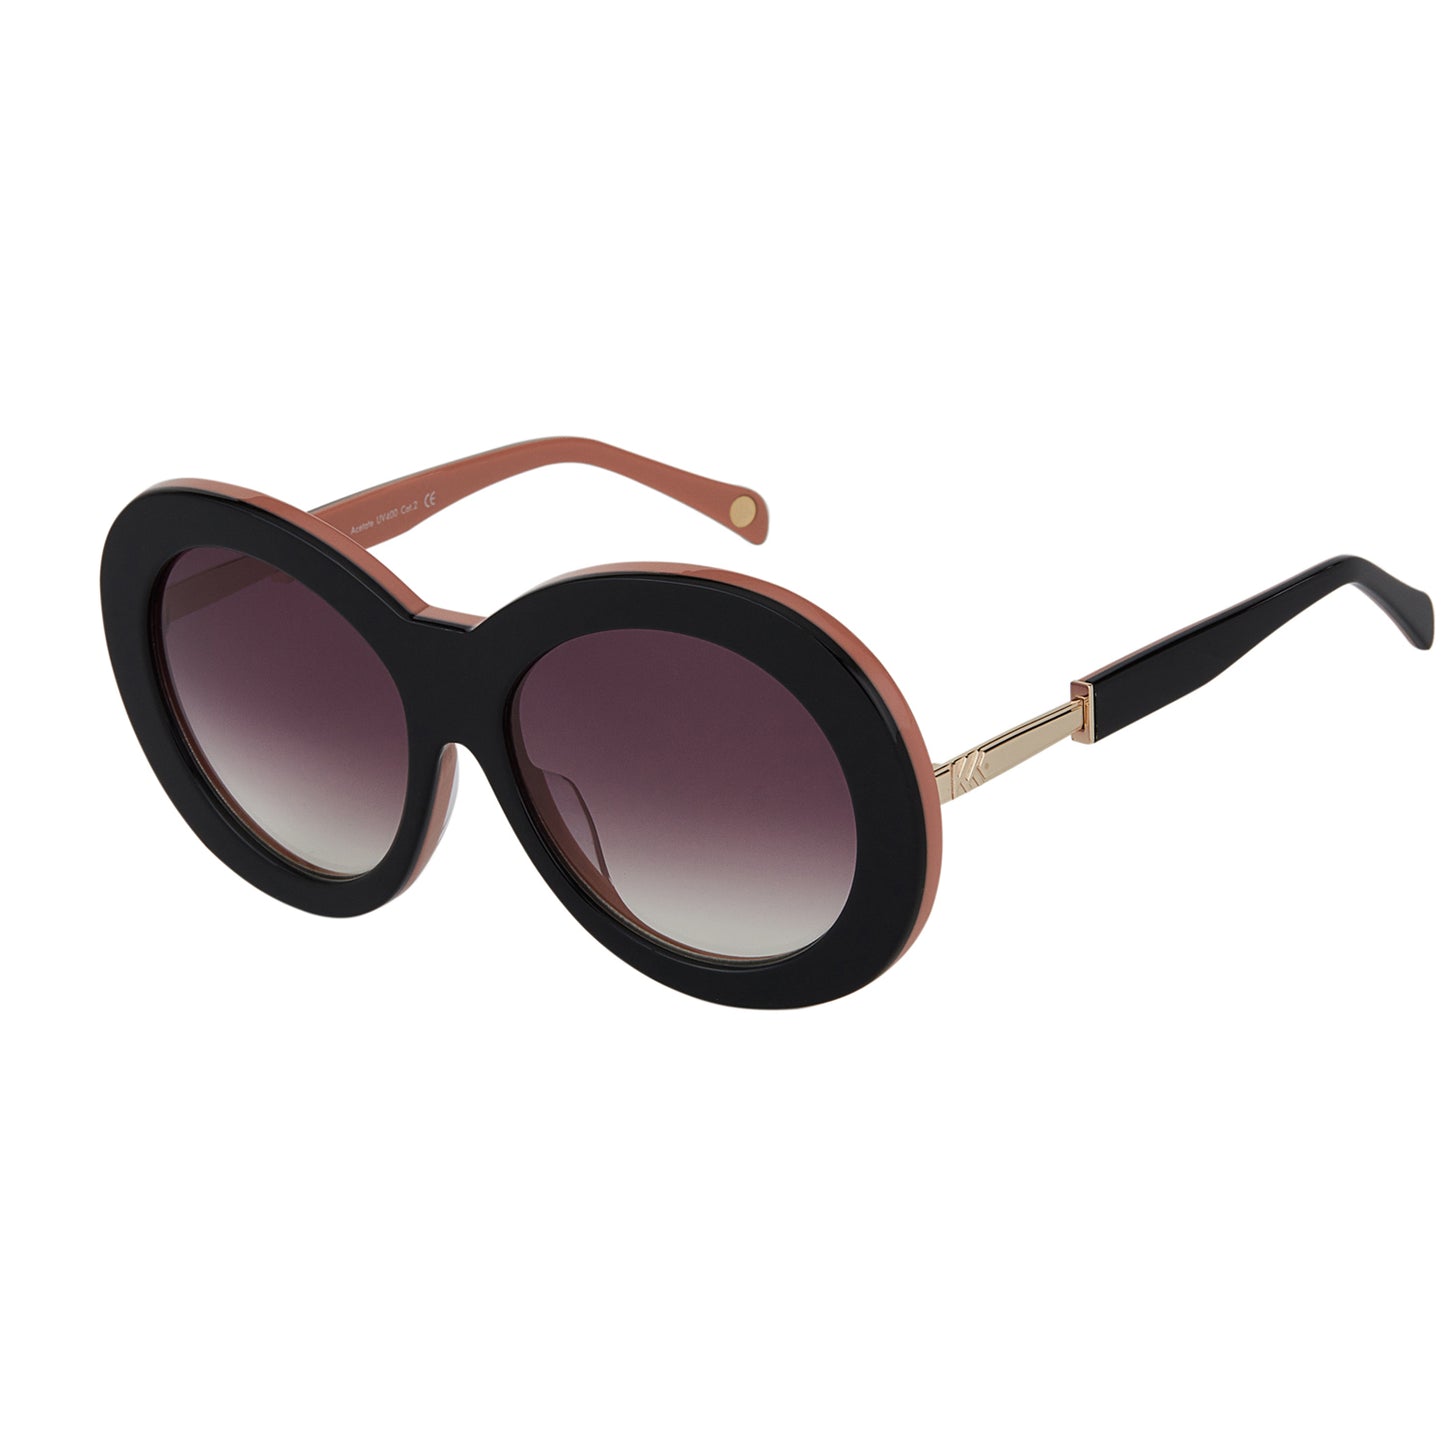 Mokki Chunky & Round sunglasses in brown